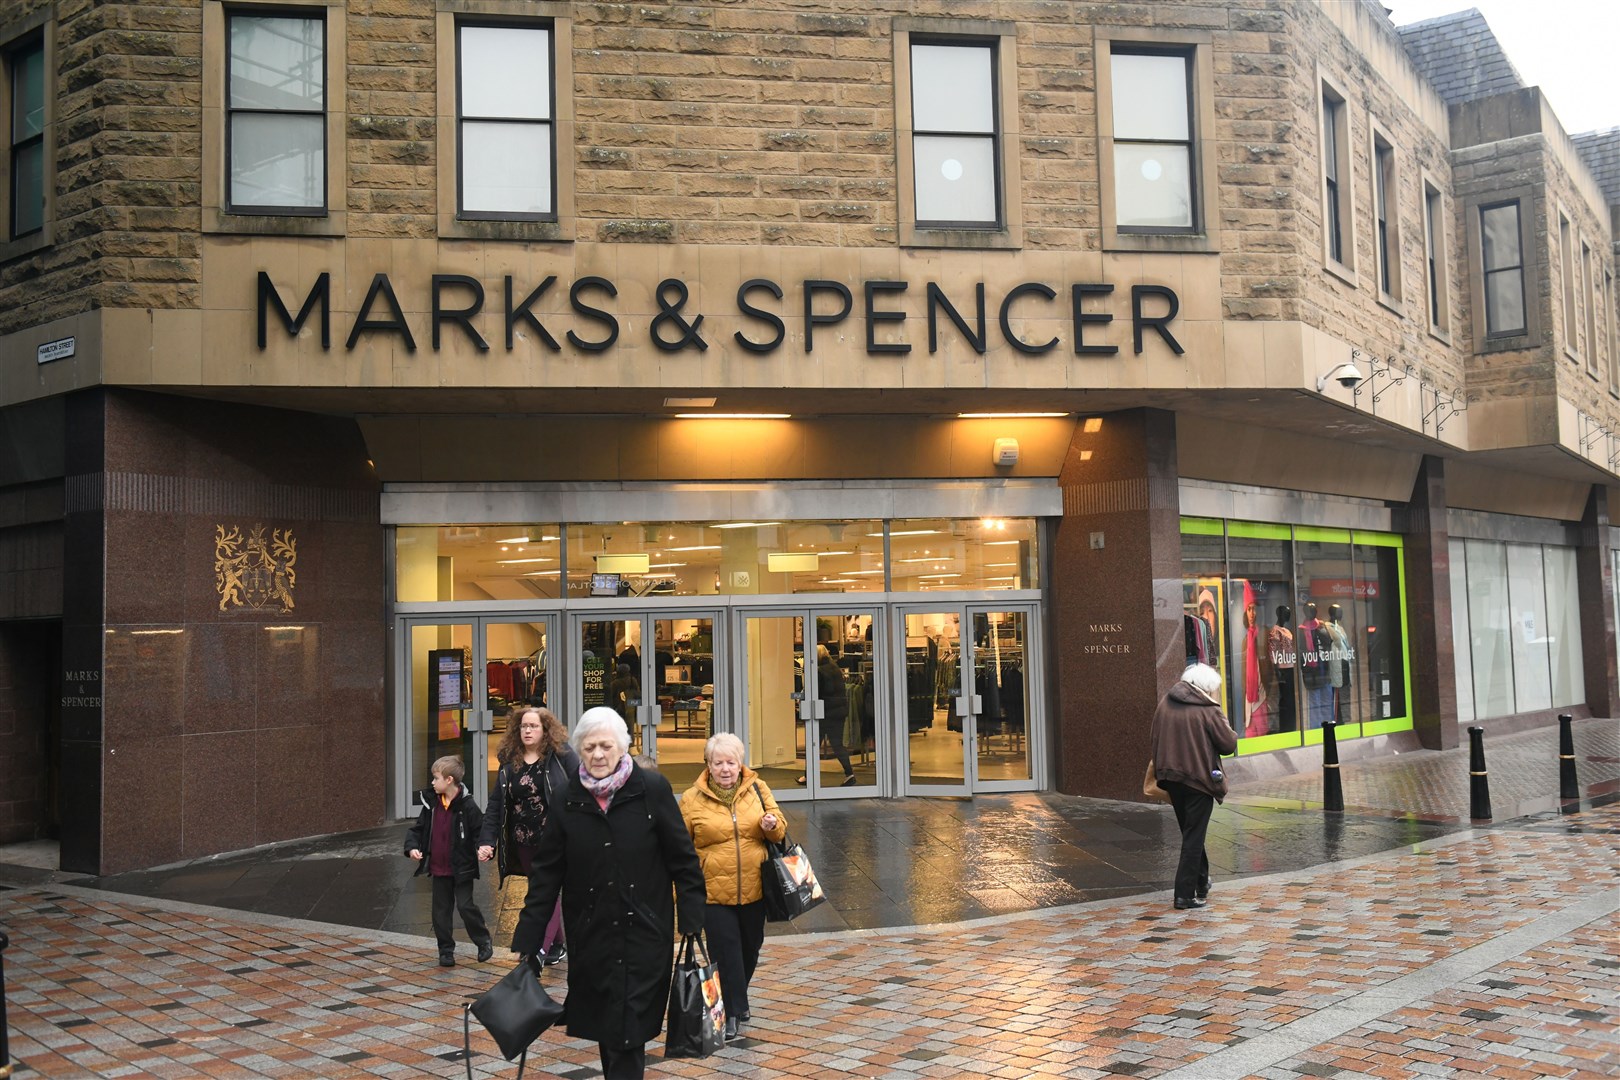 Marks & Spencer in Inverness.